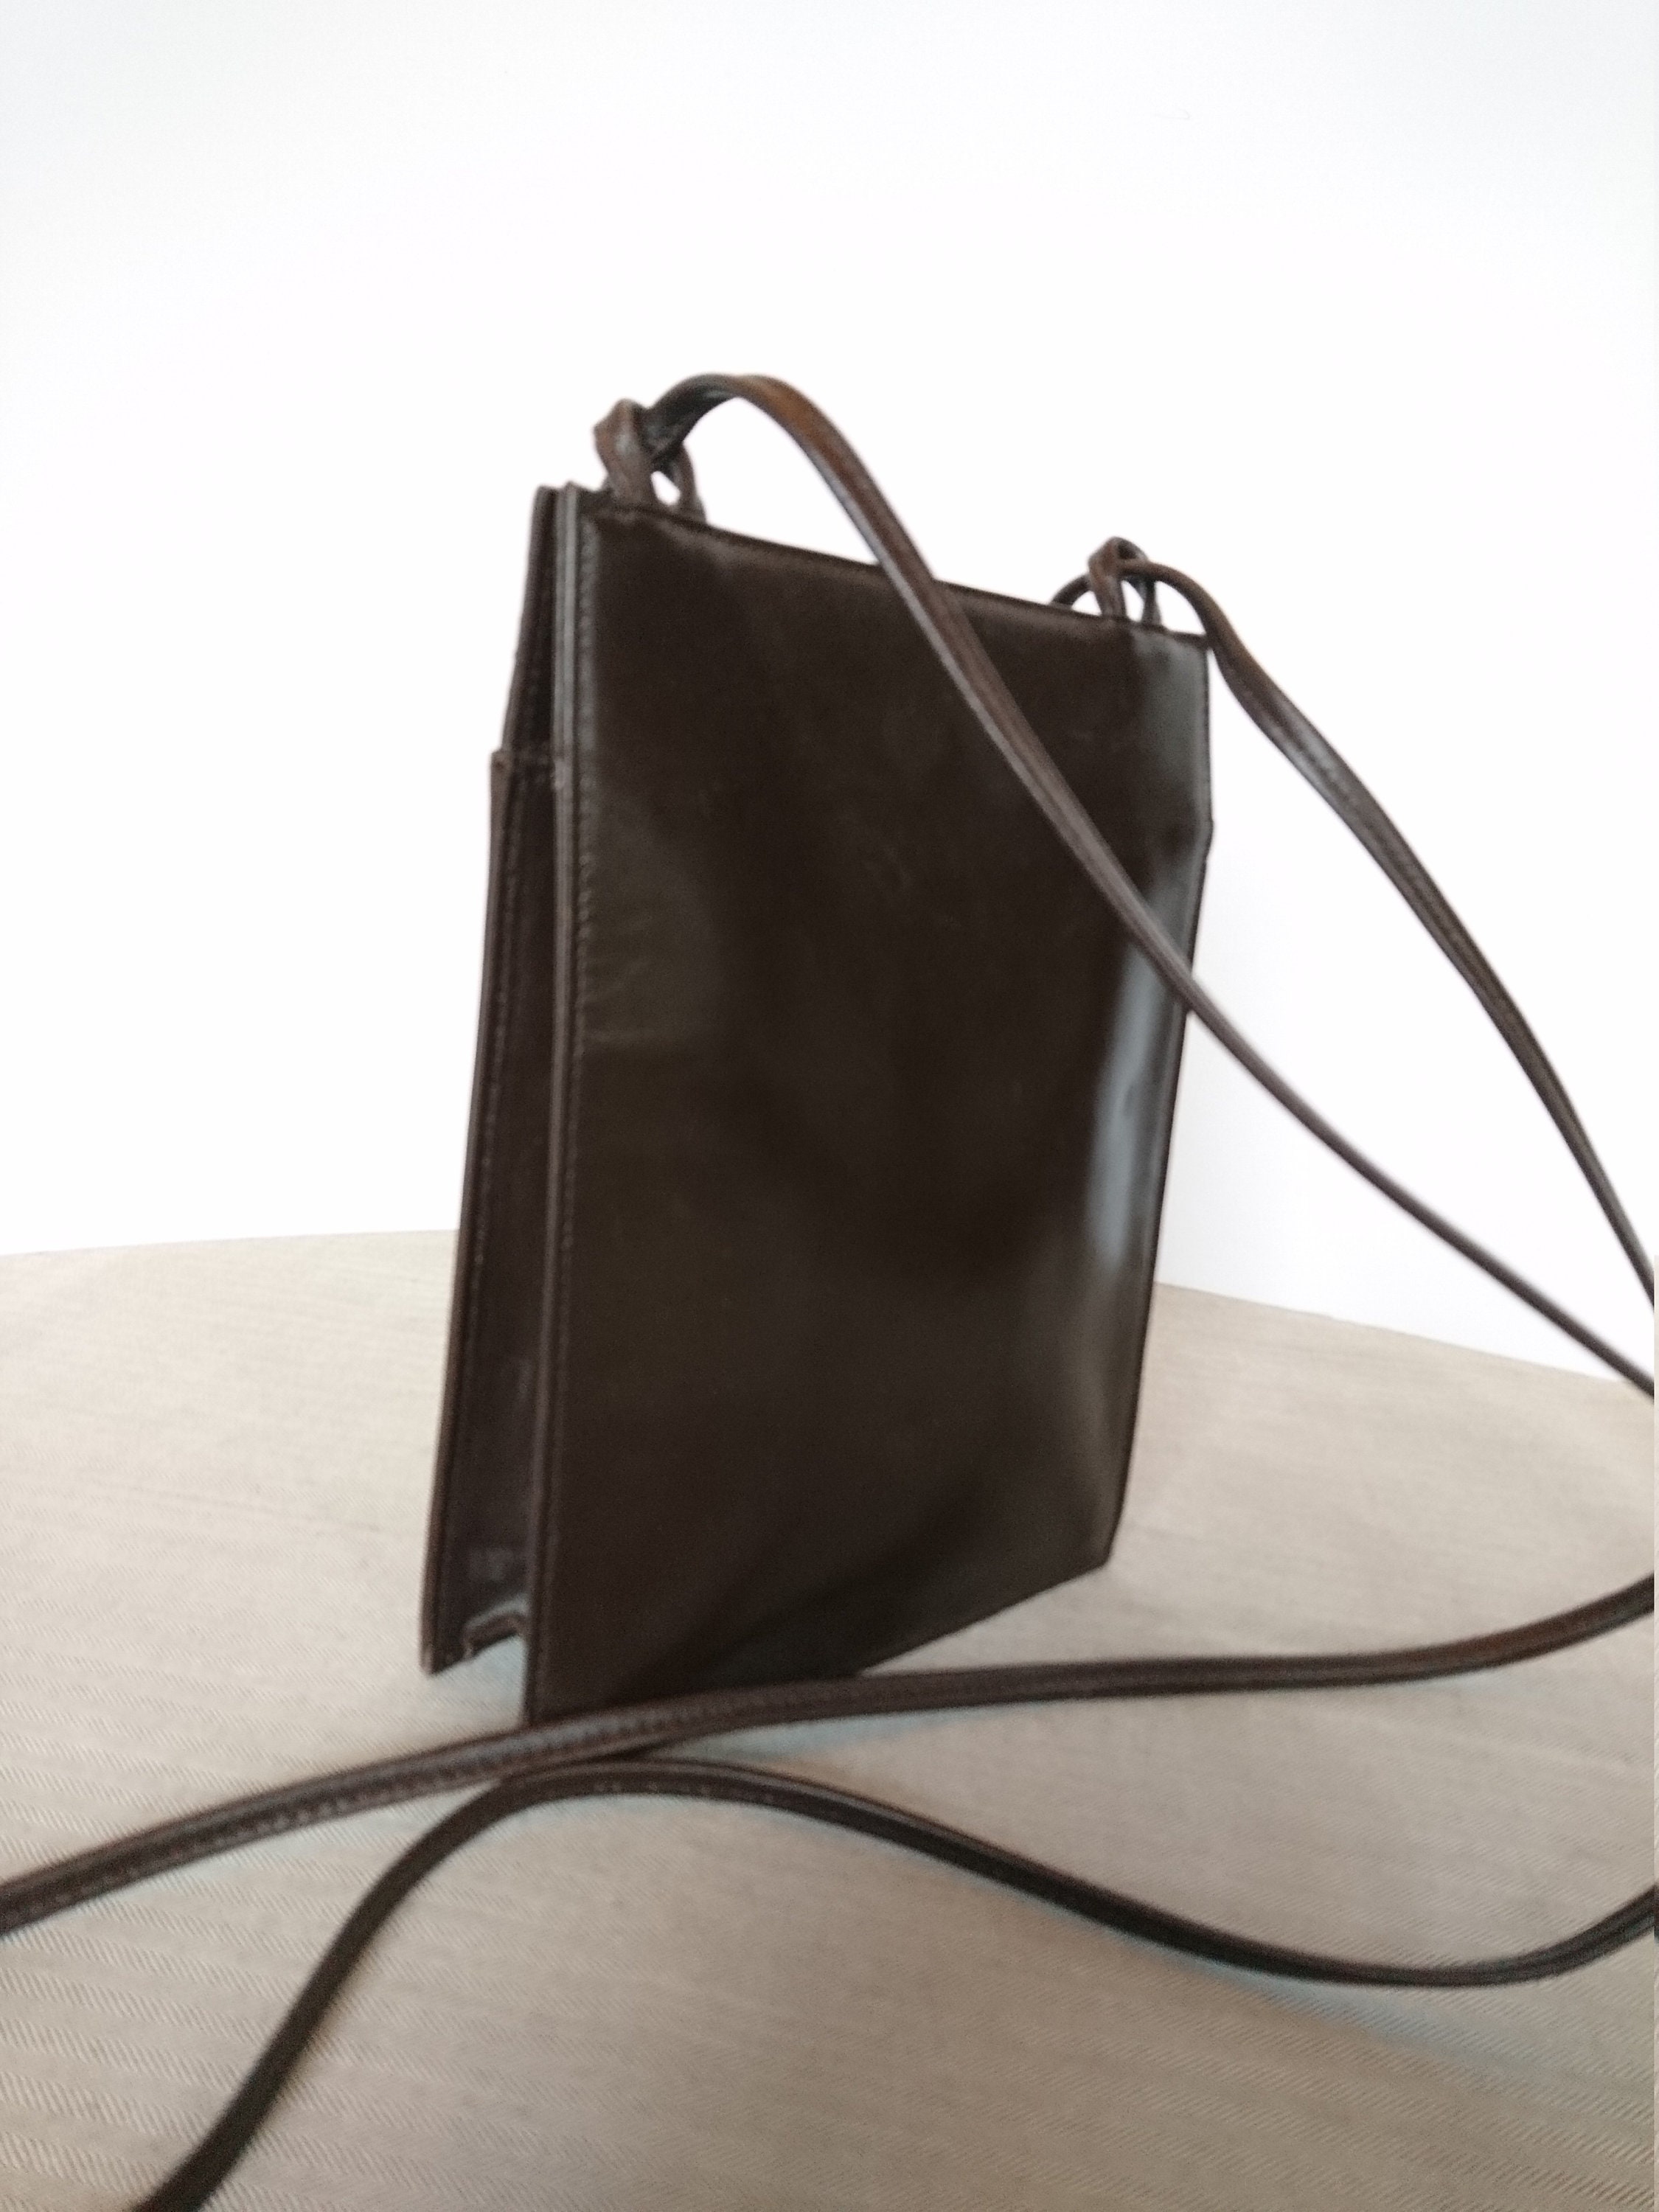 Pollini Vintage 1990s shoulder bag crossbody handbag BRAUN | Etsy